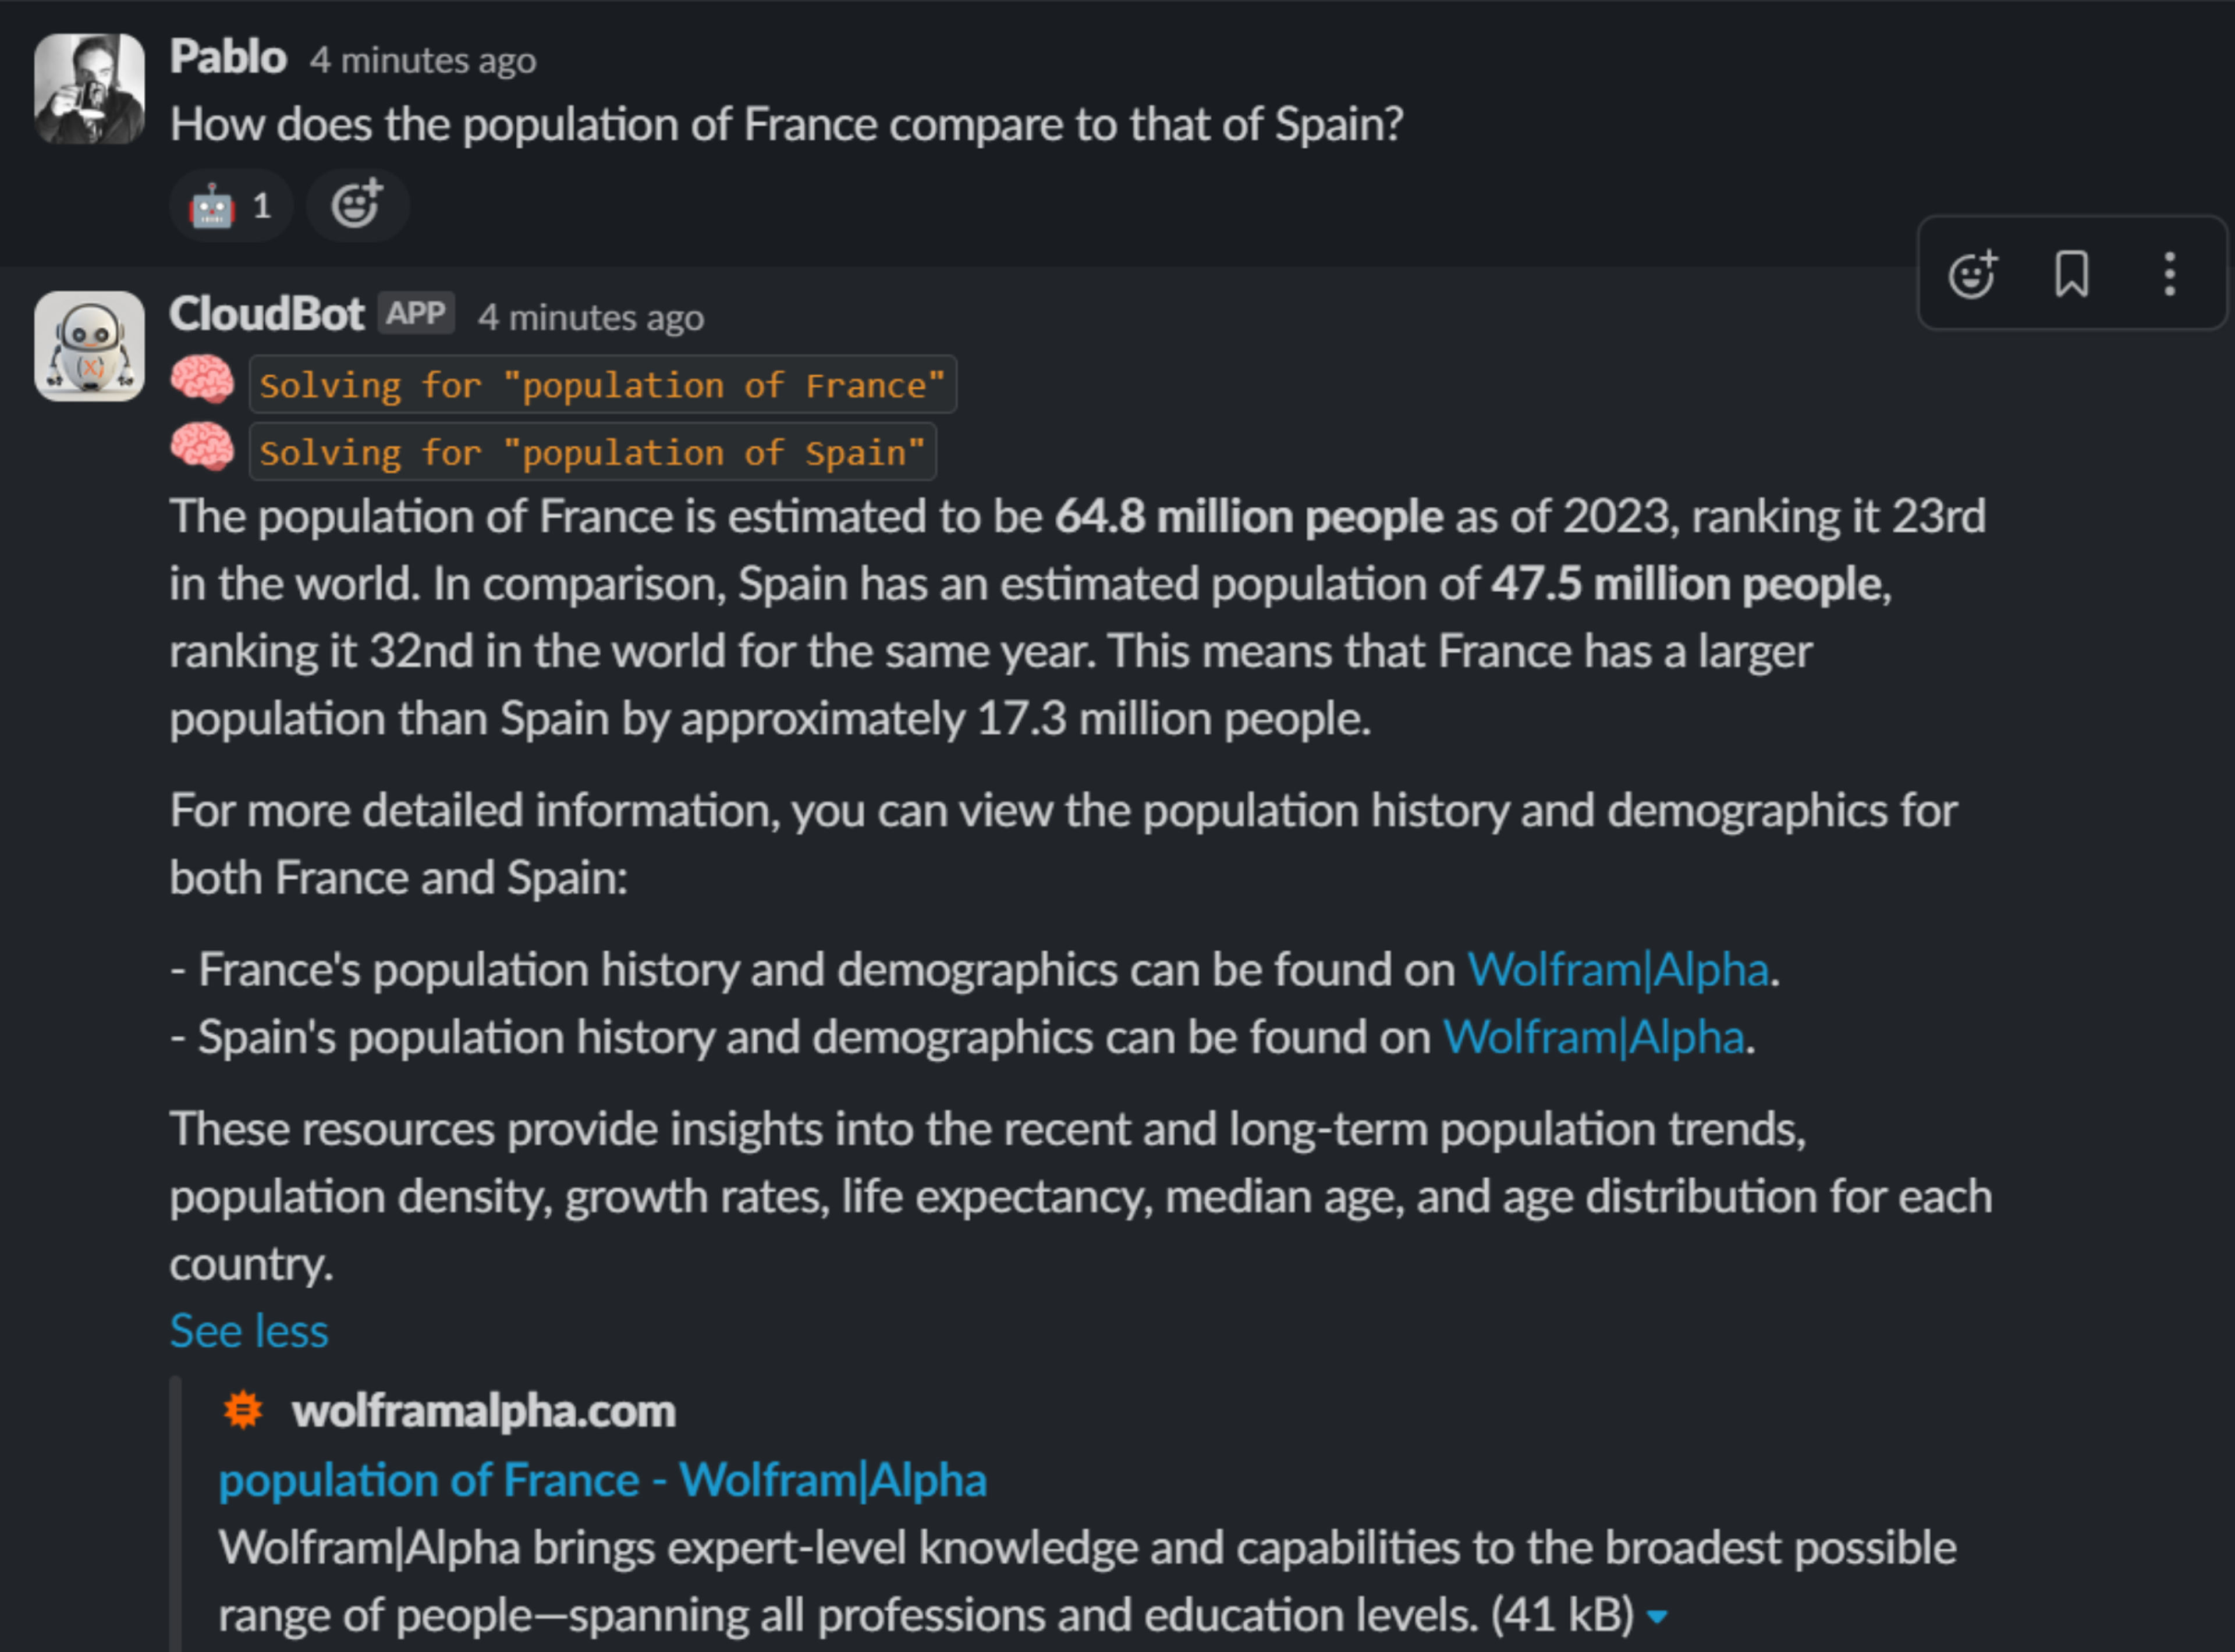 CloudBot using Wolfram Alpha to access demographic information